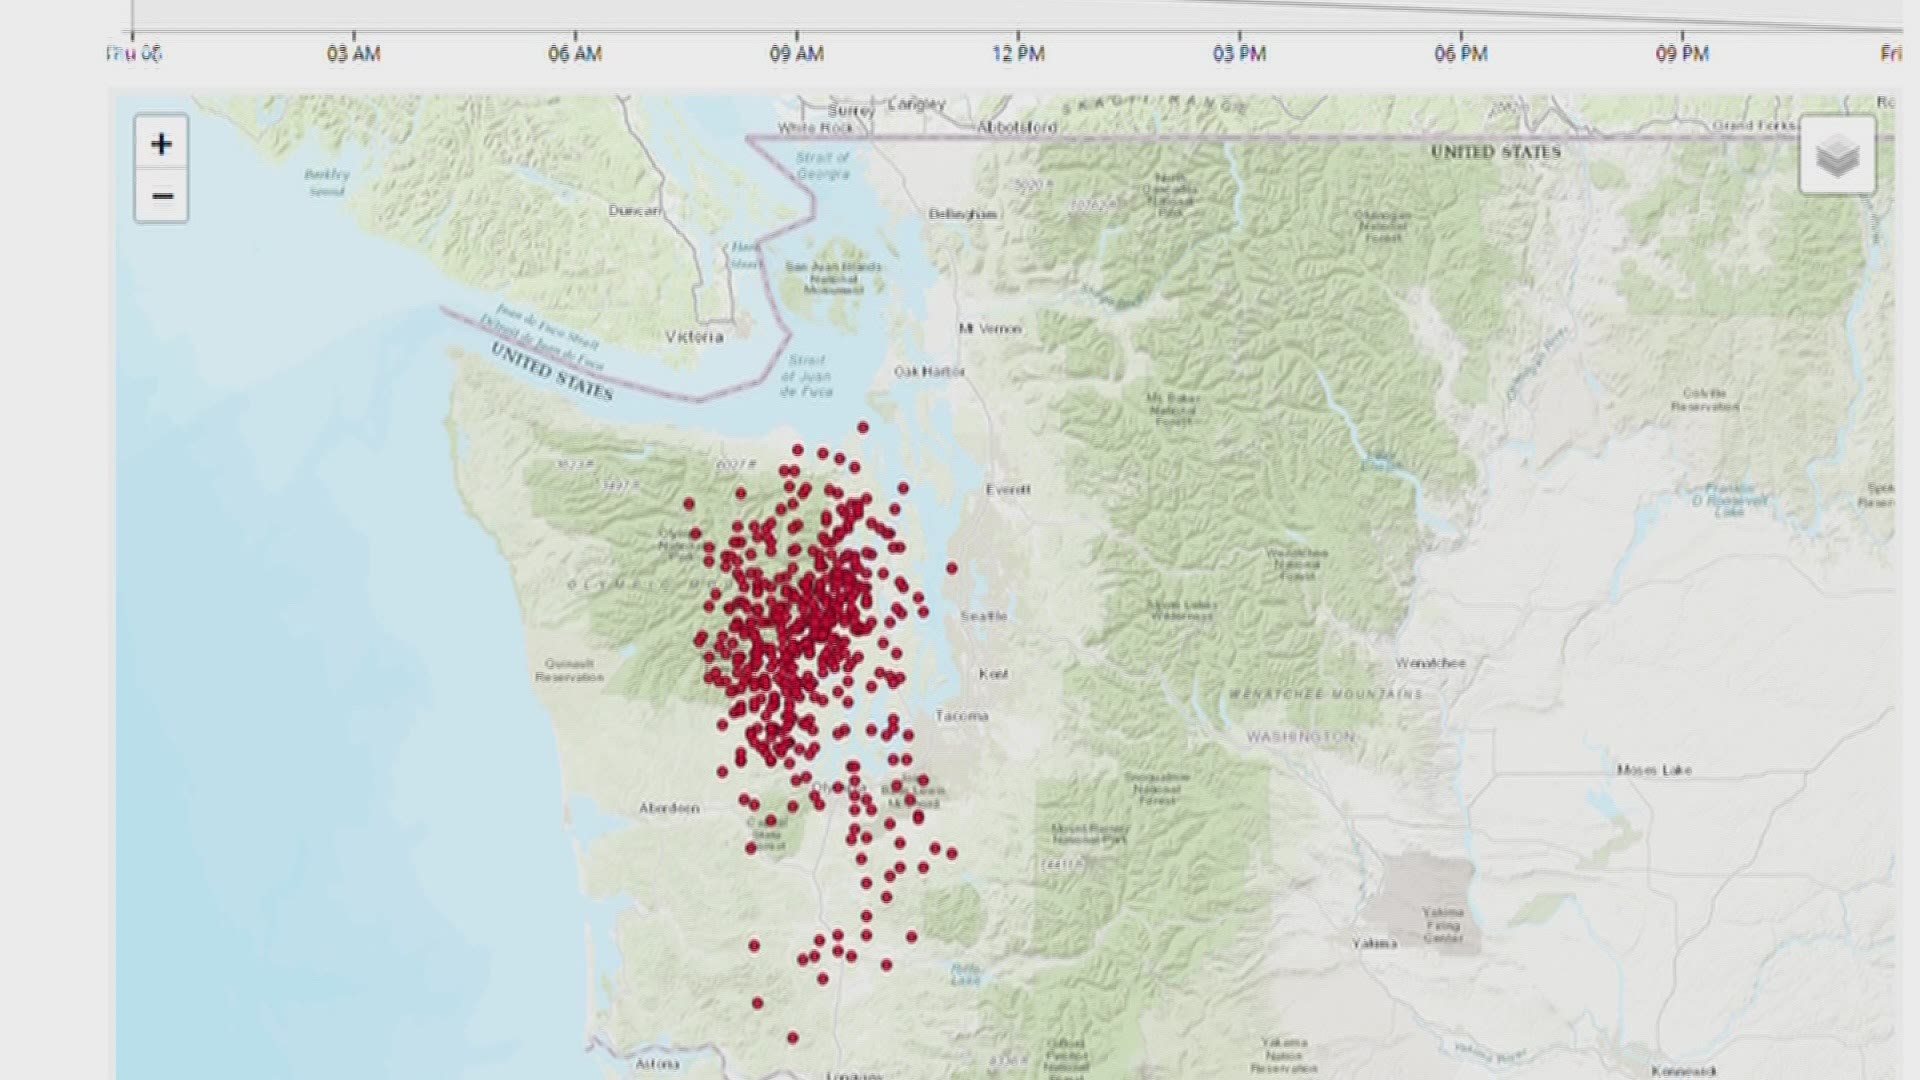 Two small earthquakes hit western Washington on Monday